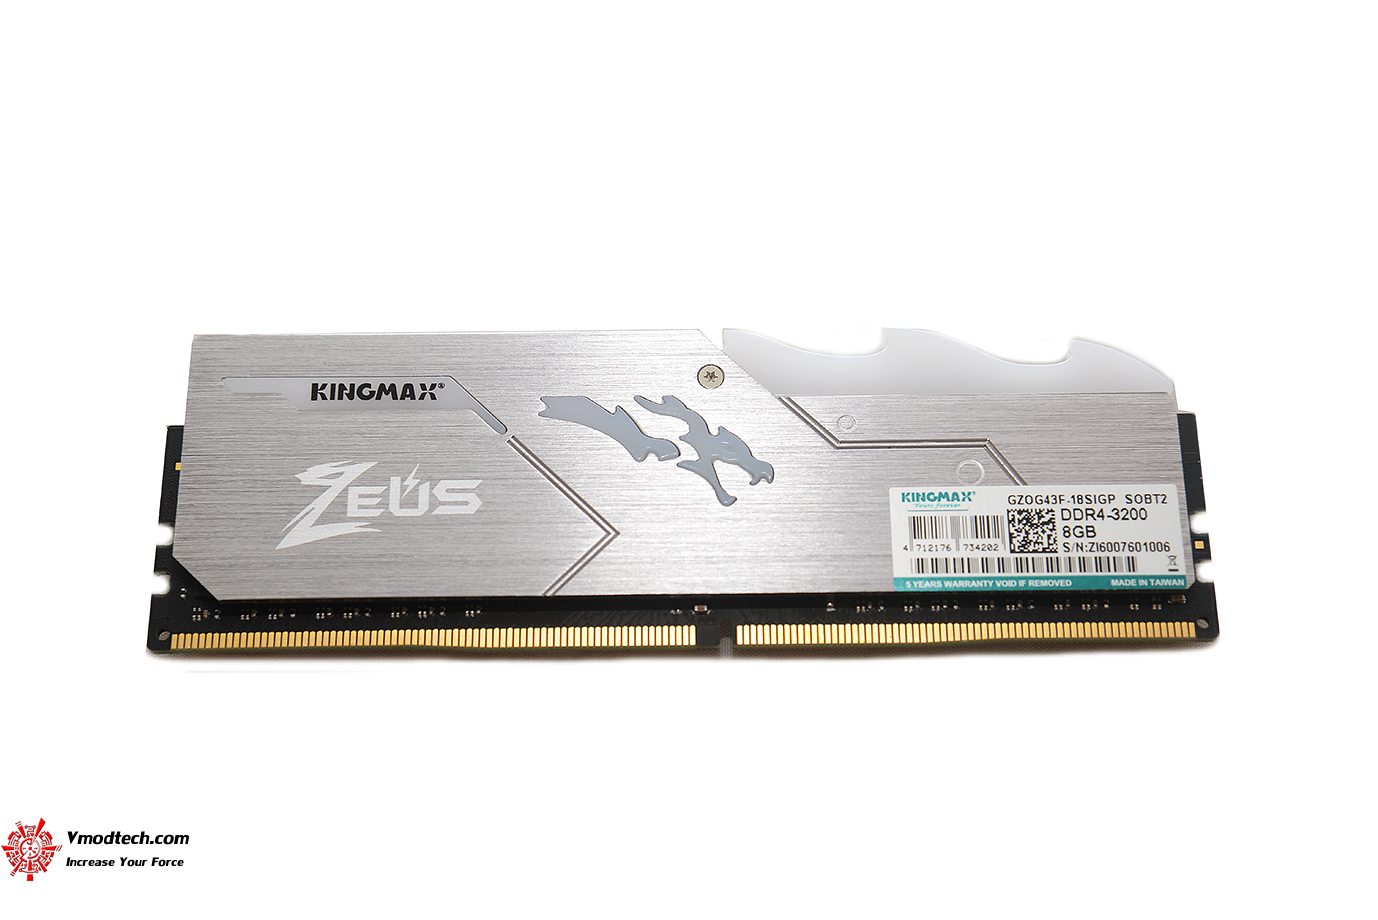 dsc 5436 Kingmax Zeus Dragon DDR4 RGB GAMING RAM 3200Mhz Review